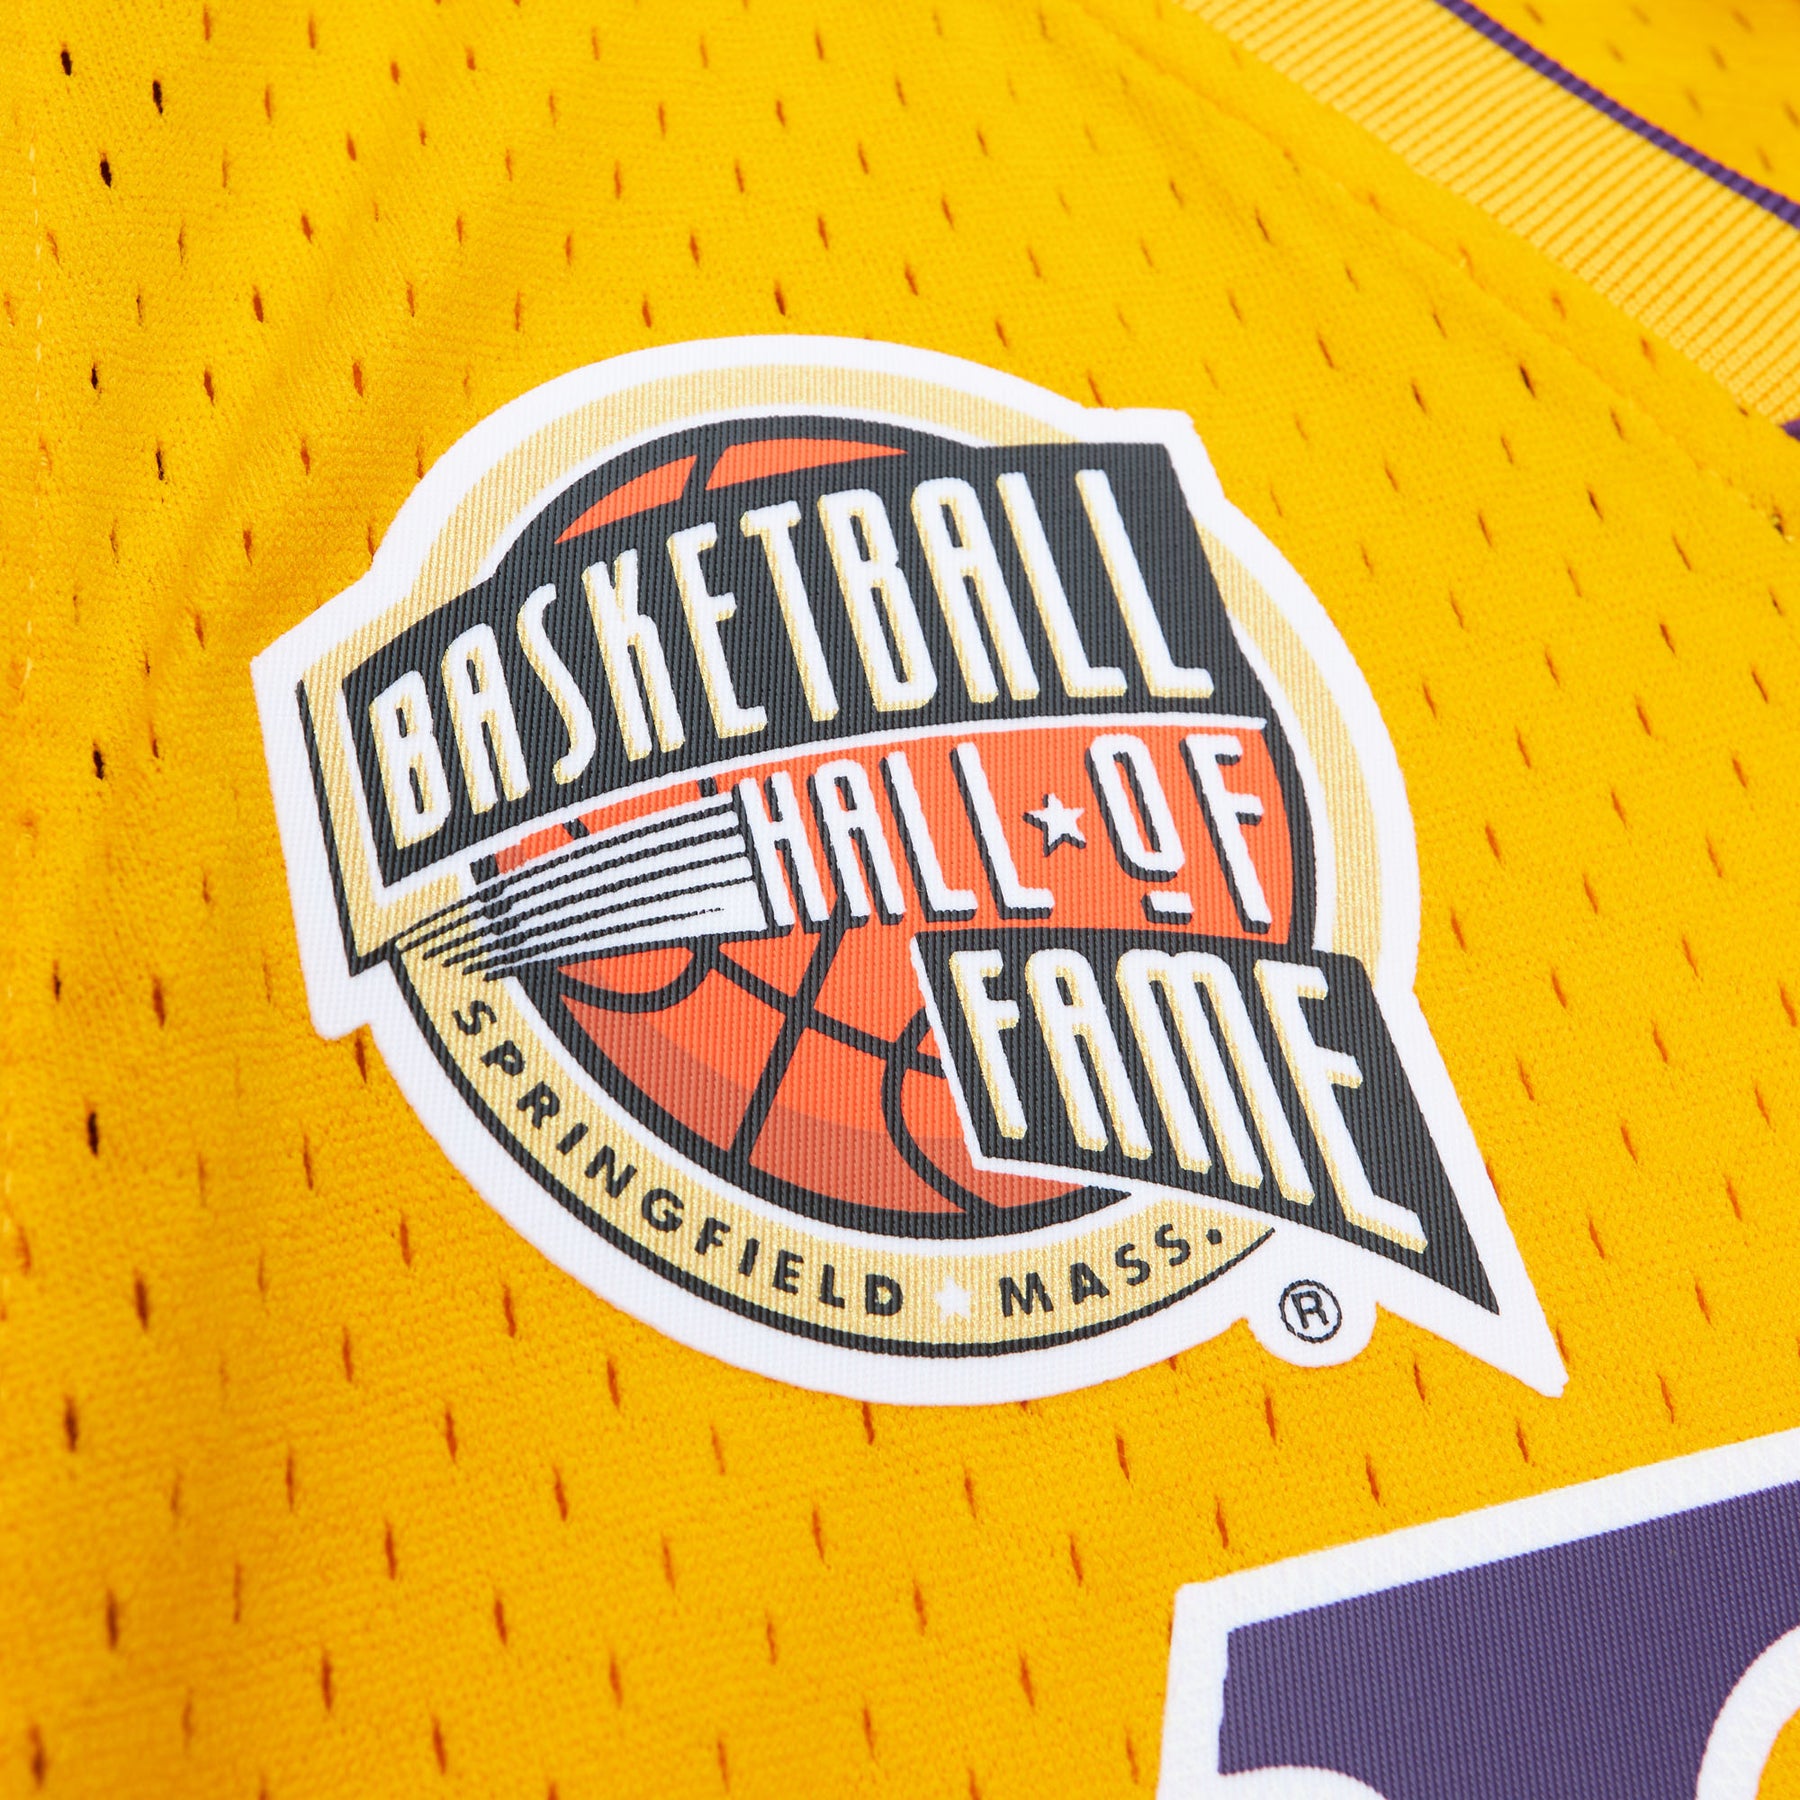 Mitchell & Ness NBA Swingman Jersey Los Angeles Lakers Hall of Fame Pau Gasol #16 Men Jerseys Yellow in Size:S